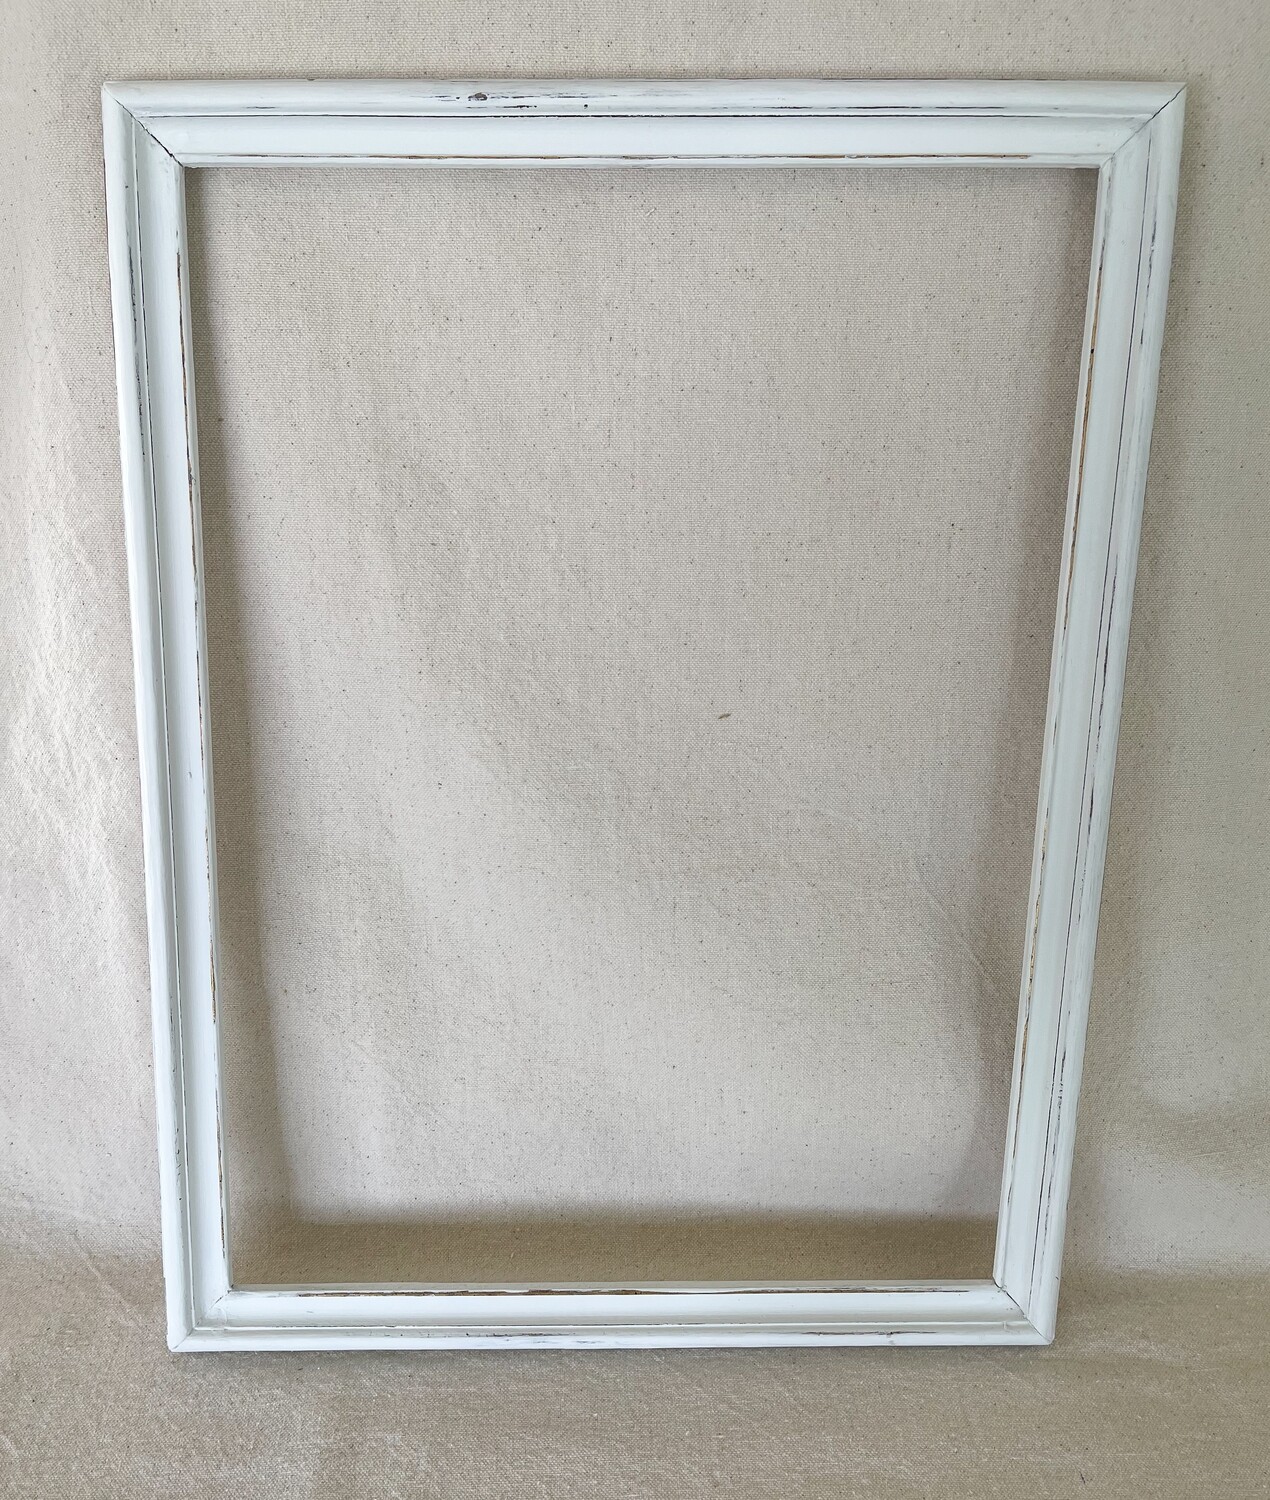 White Distressed Wood Frame